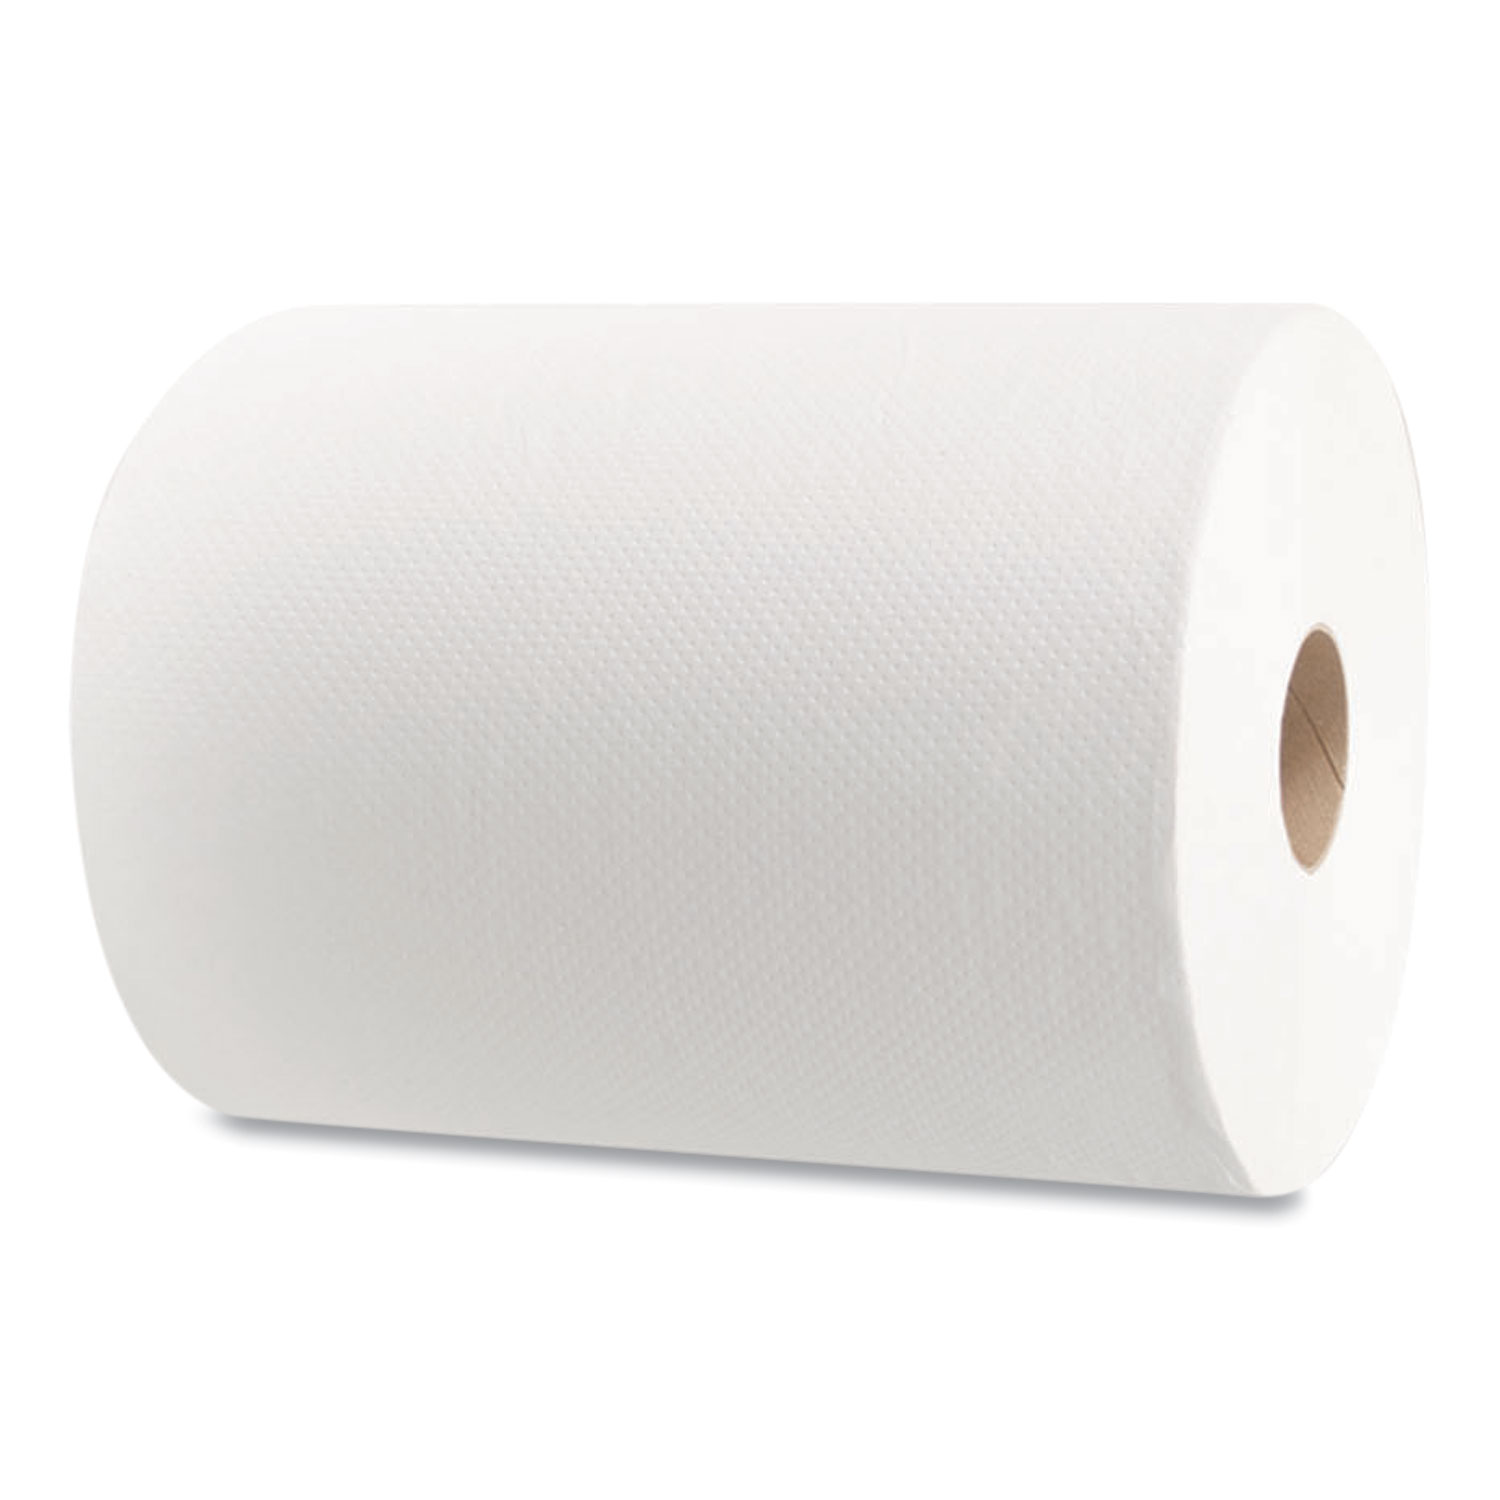 6 Rolls soft,new Free Shipping Details about   Paper Towel Rolls Marathon Hardwound White 